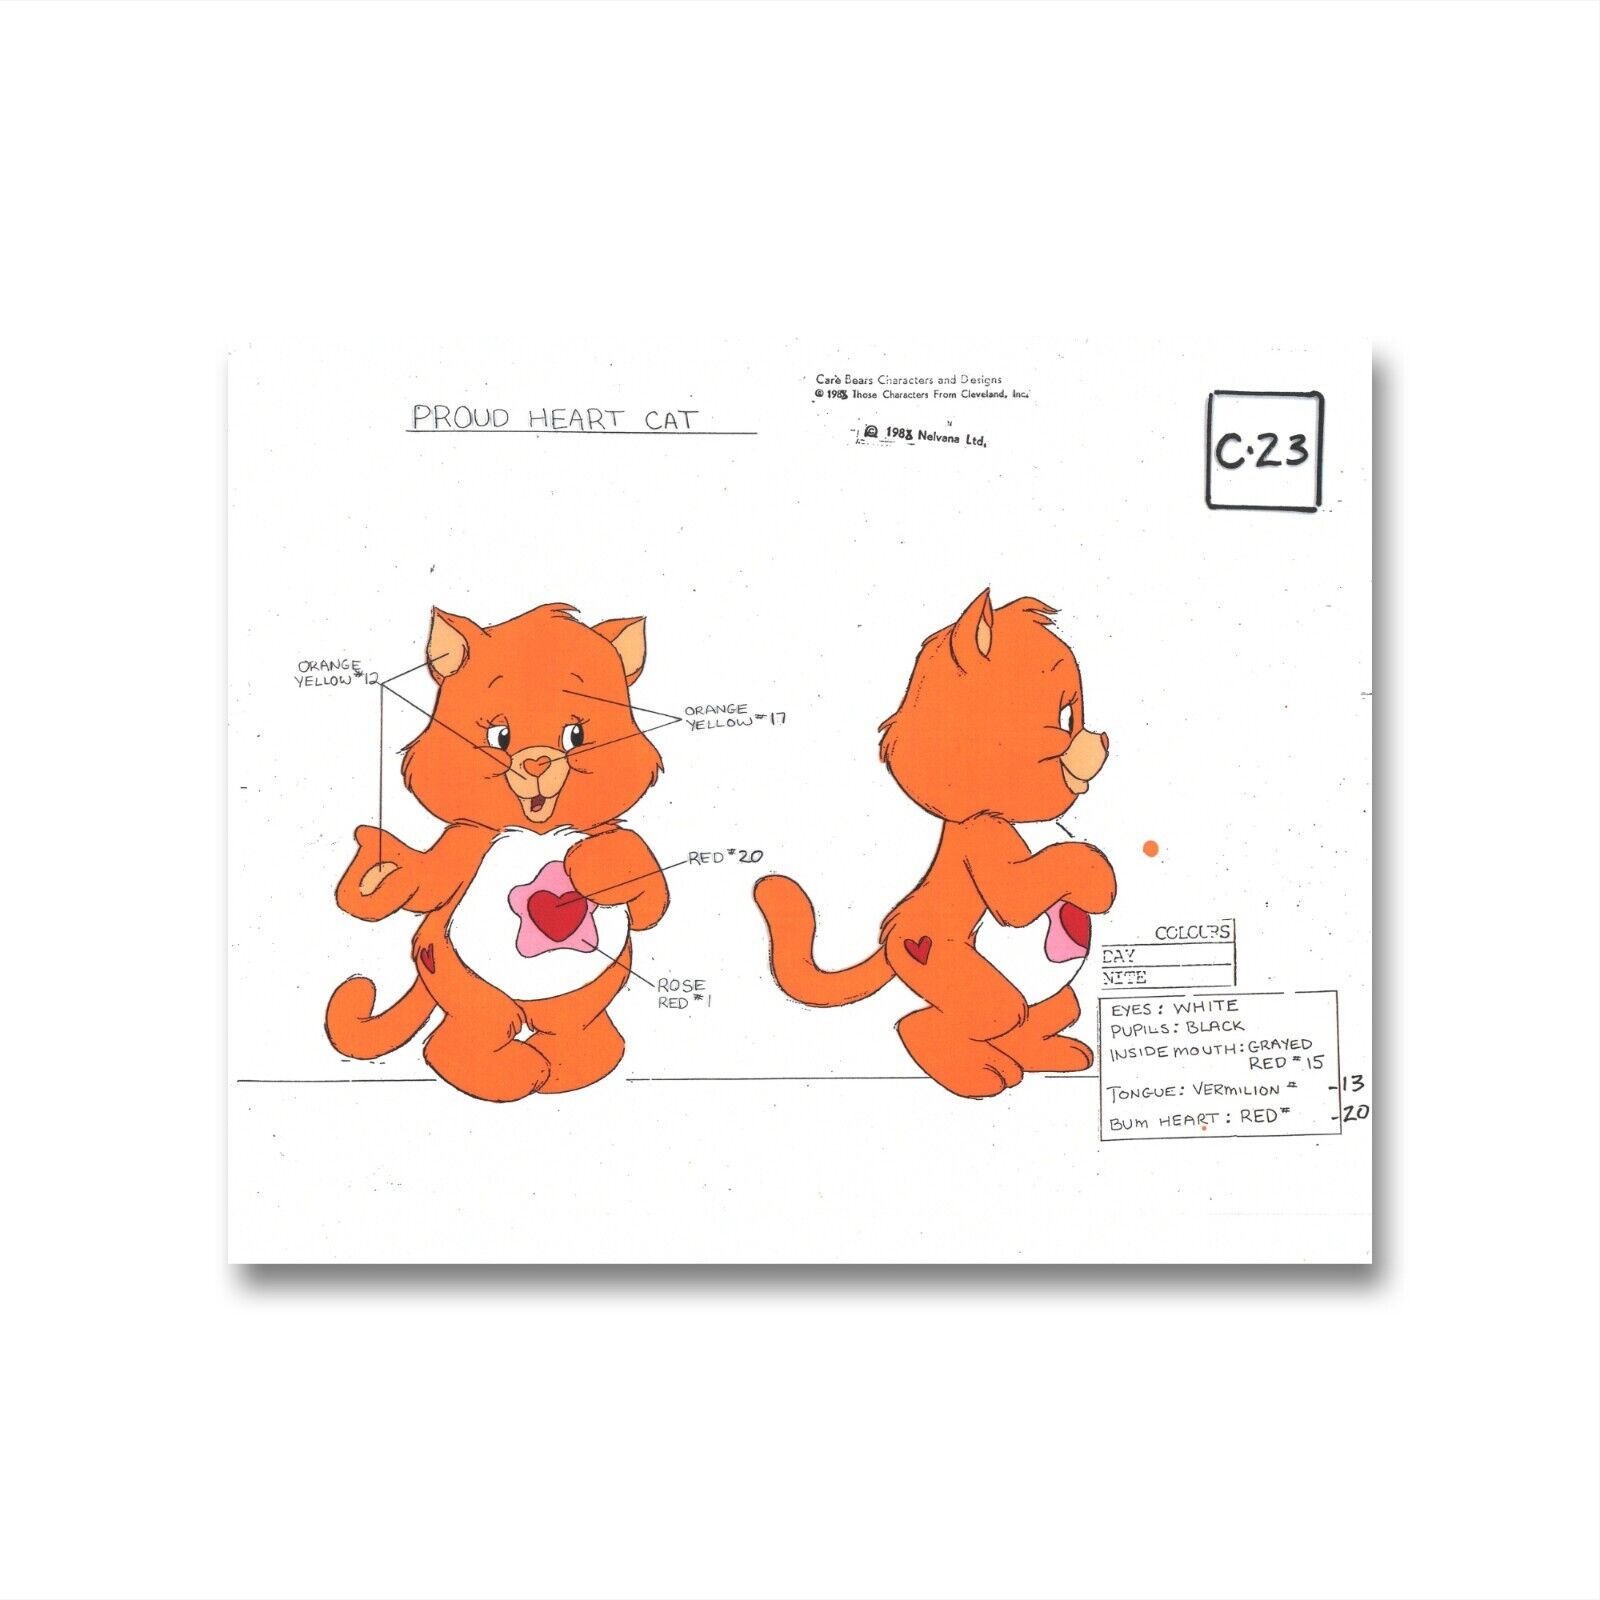 Care Bears Original Production Color Model Sheet: Proud Heart Cat, SSV1141